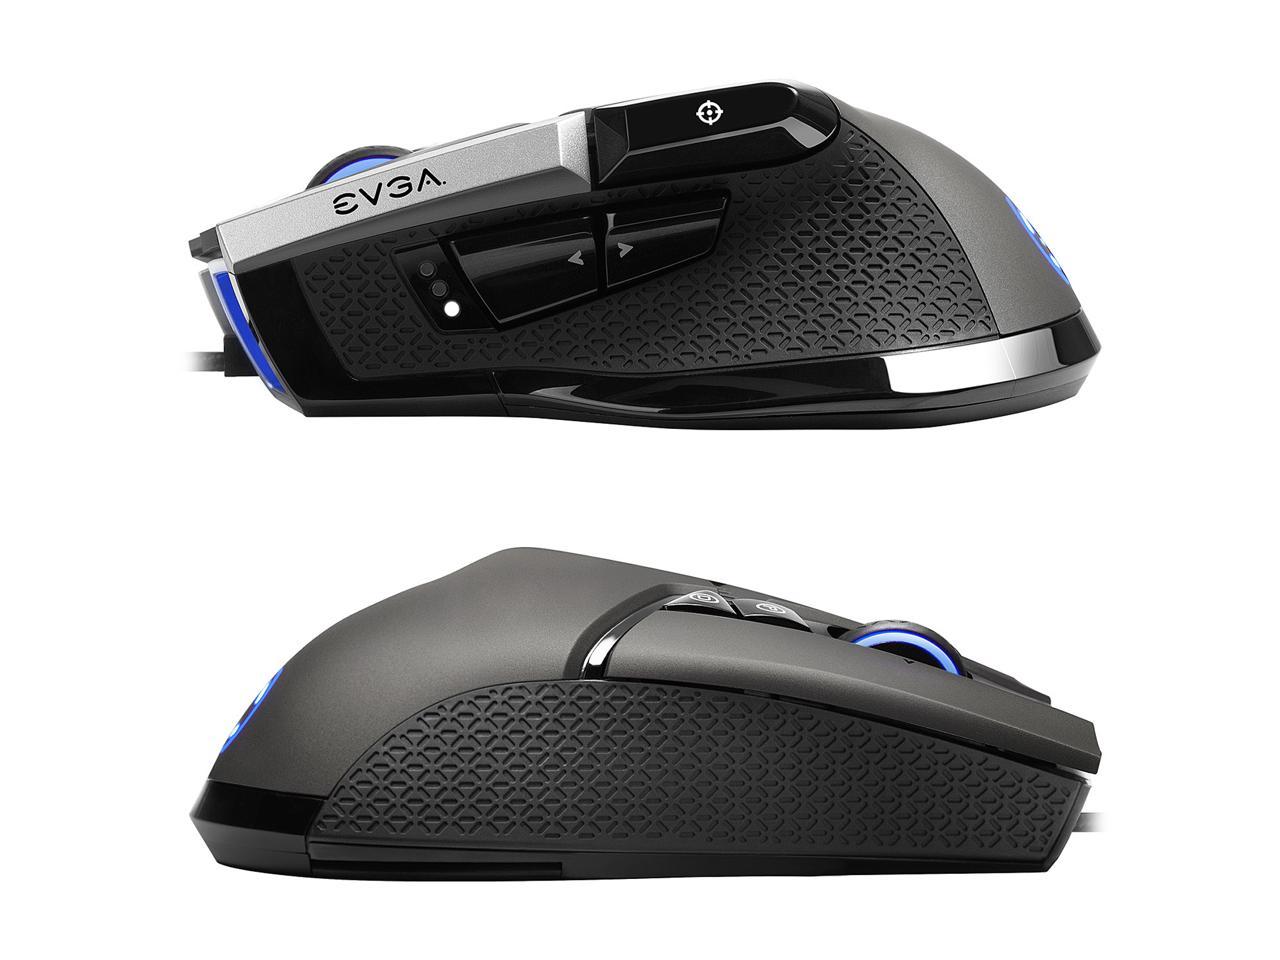 EVGA X17 16000dpi Gaming Mouse @Newegg $25